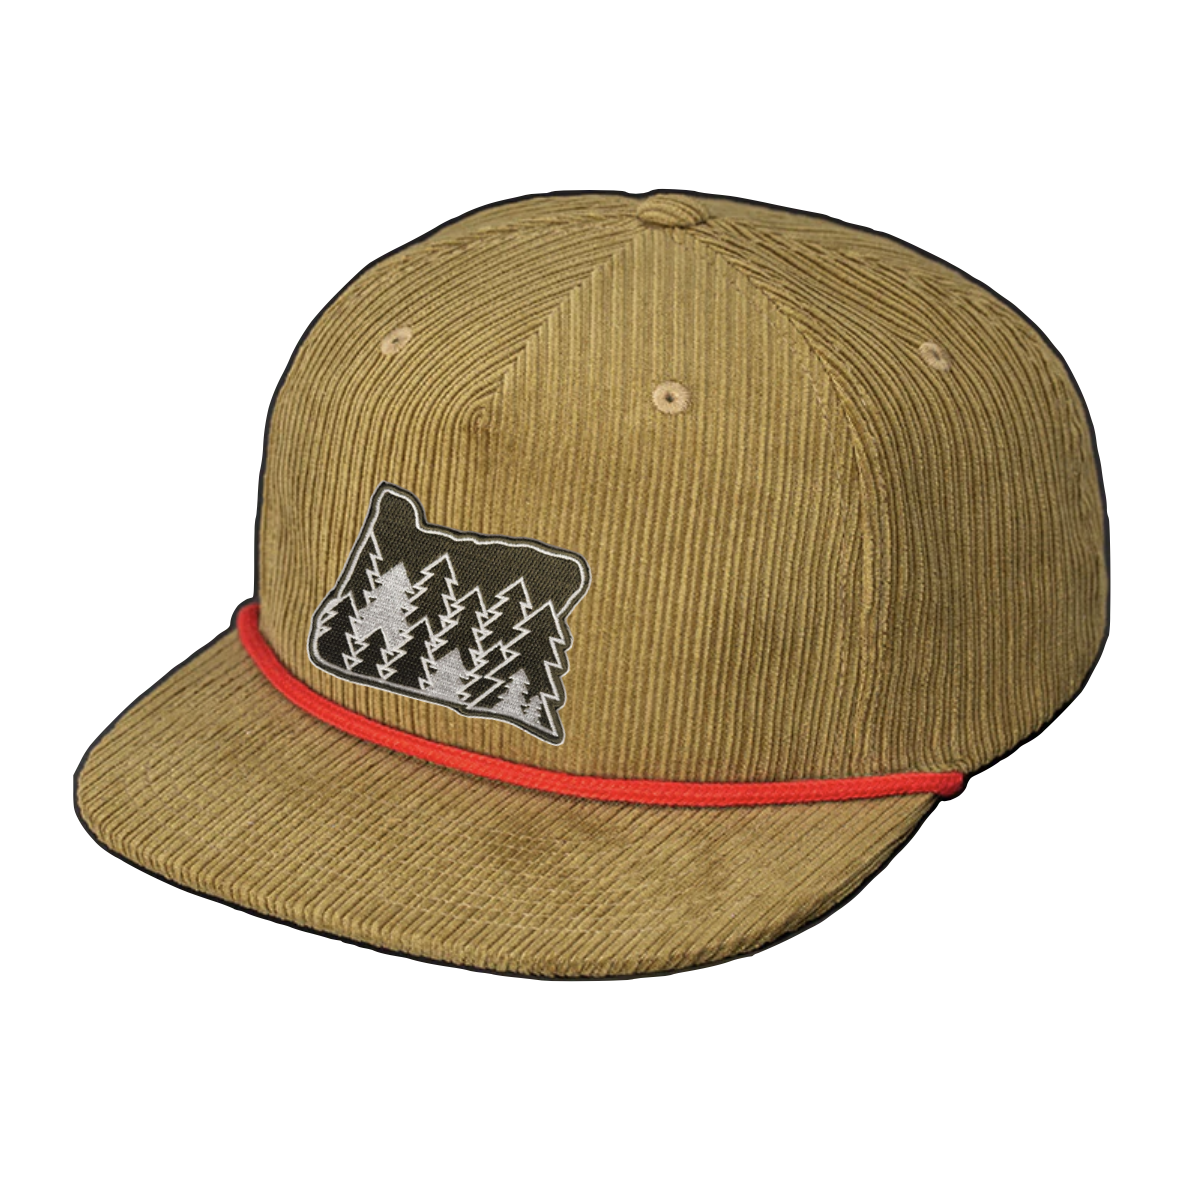 Evergreen Cord Hat